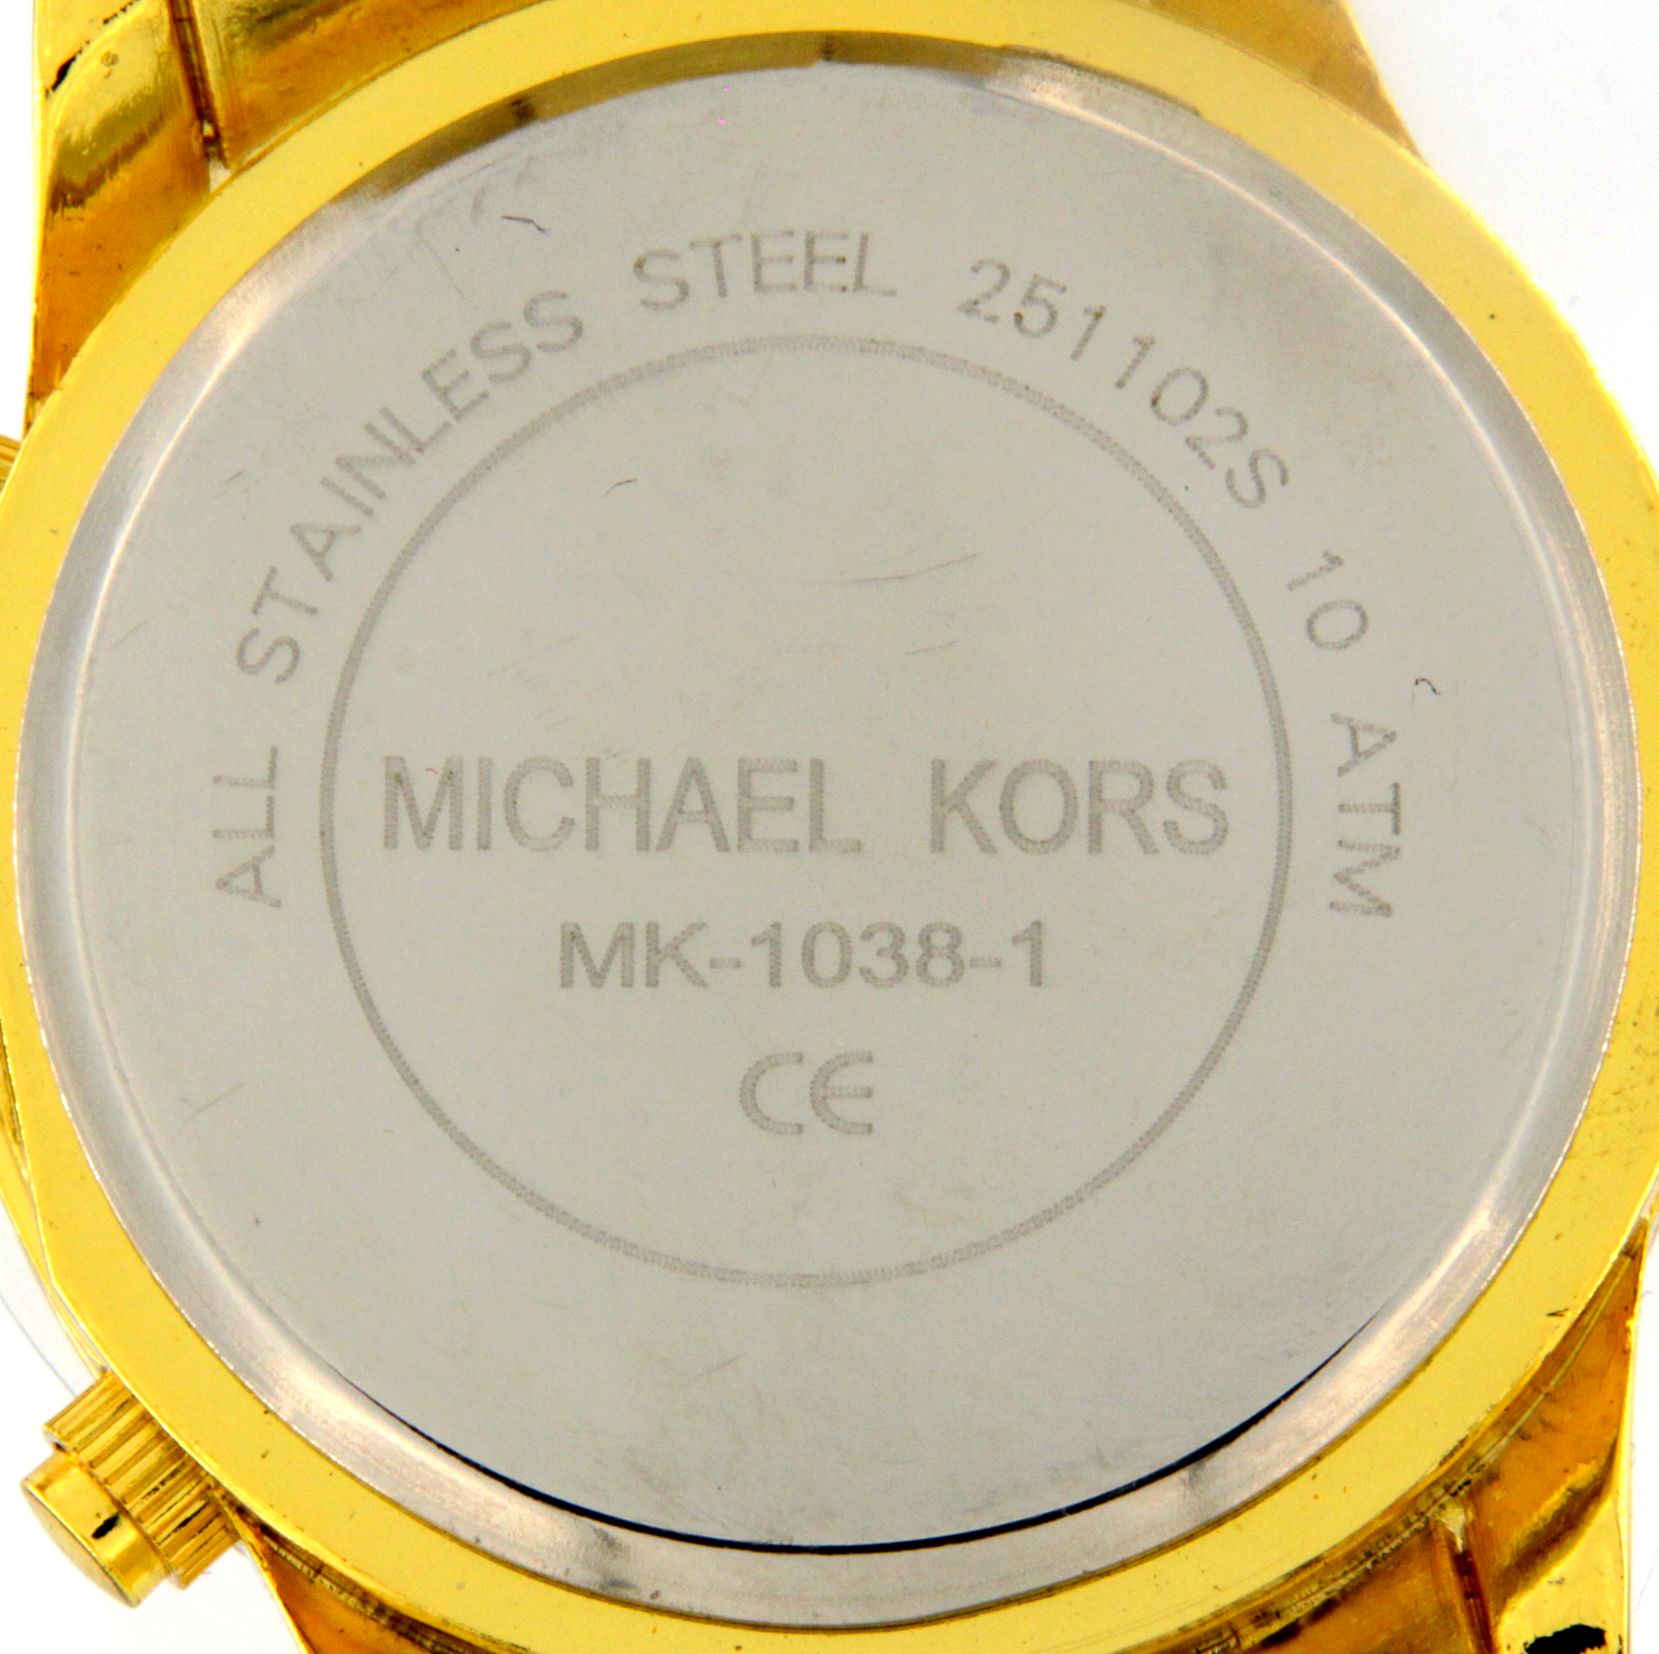 michael kors mk 1038 price